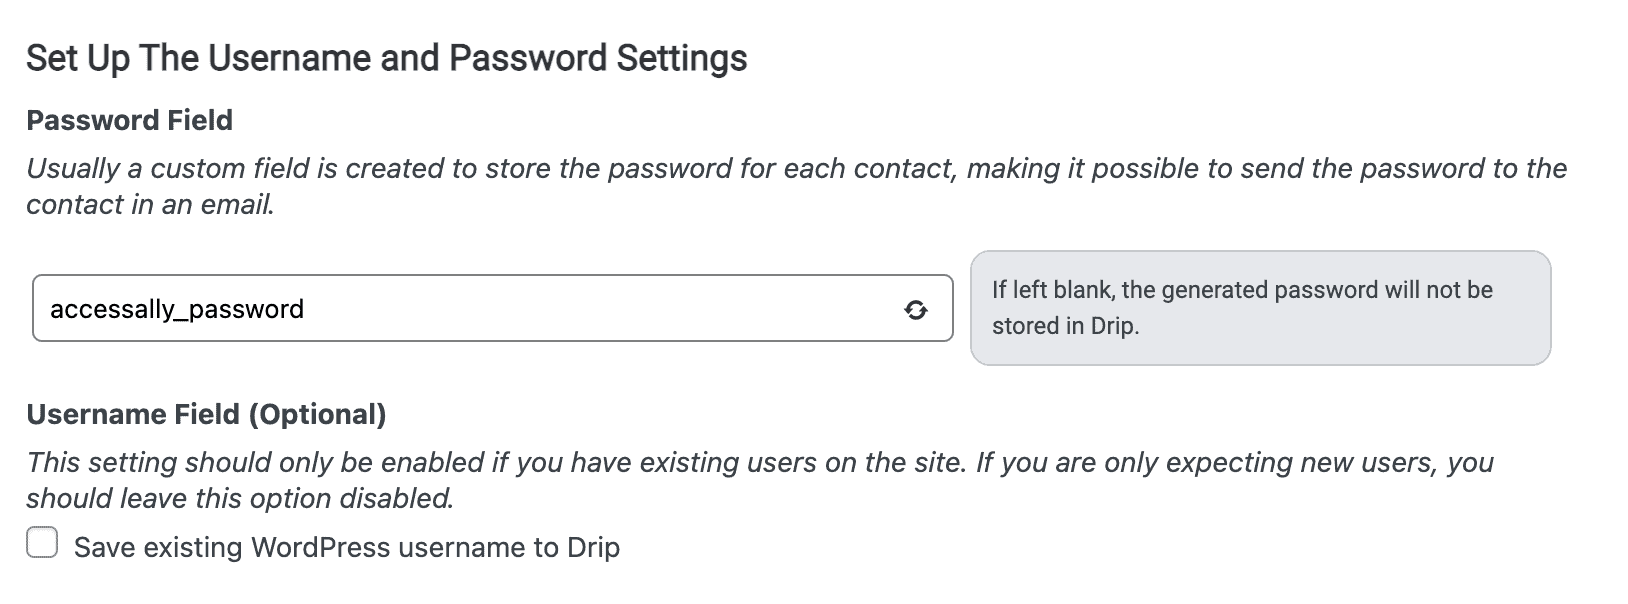 Screenshot of password field settings